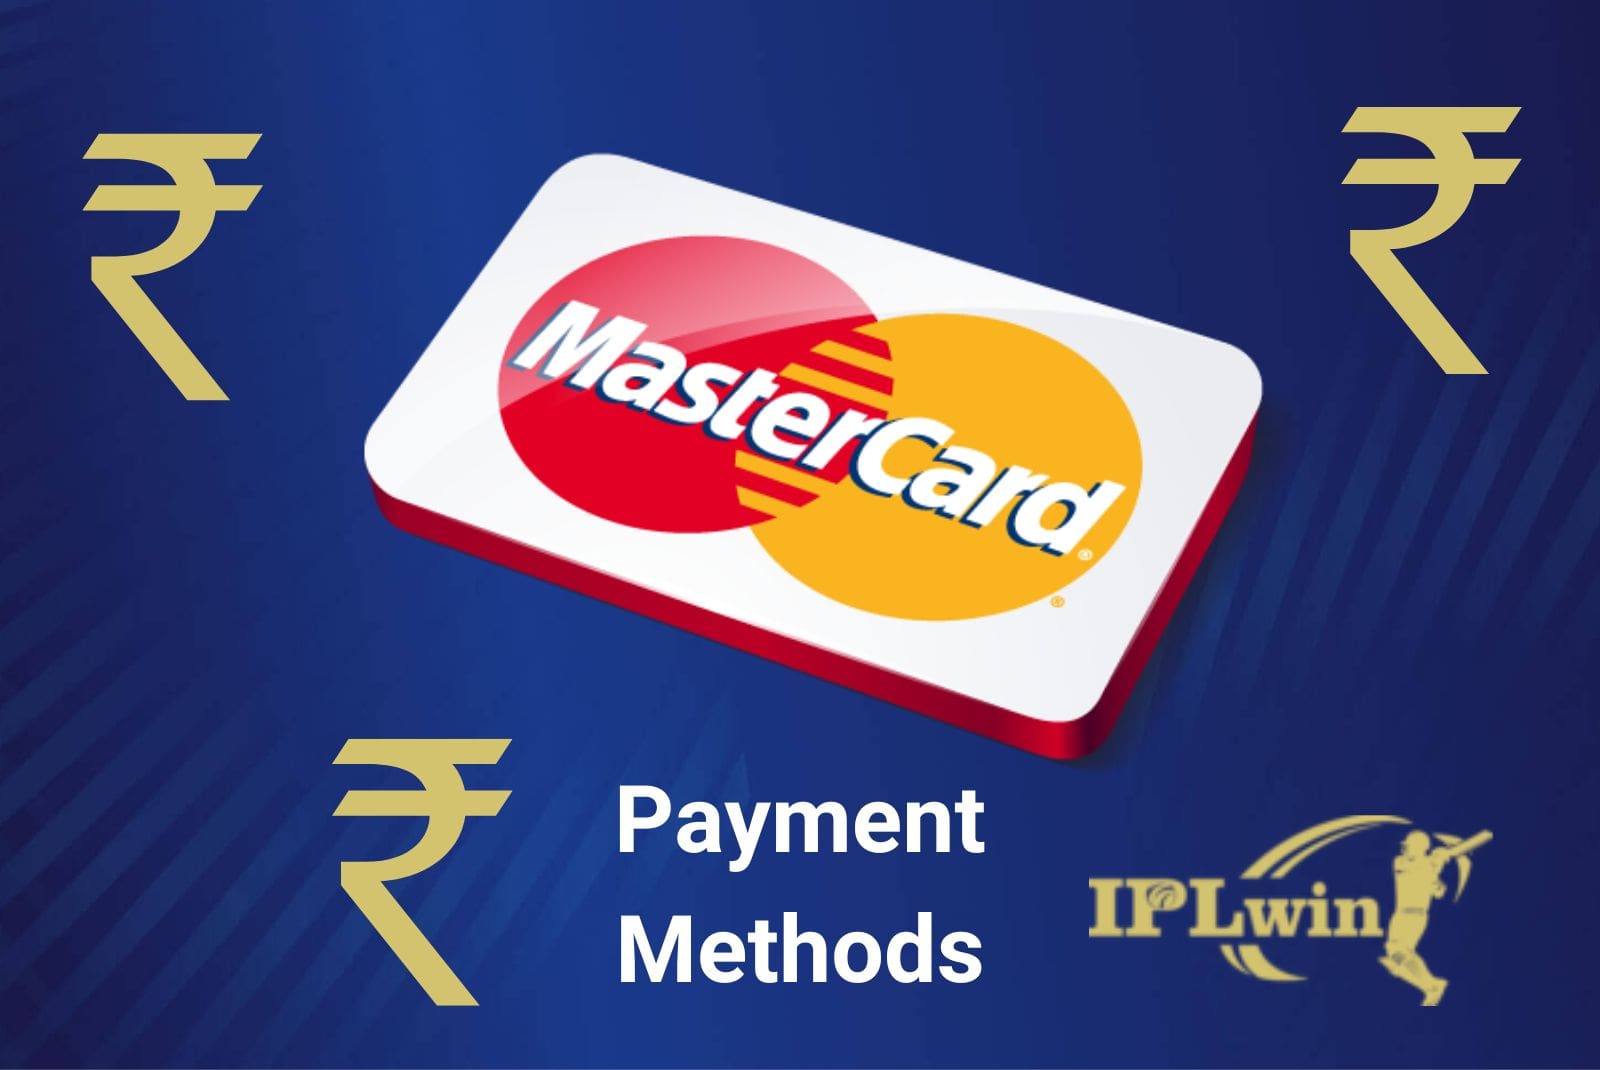 IPLwin India payment methods overview